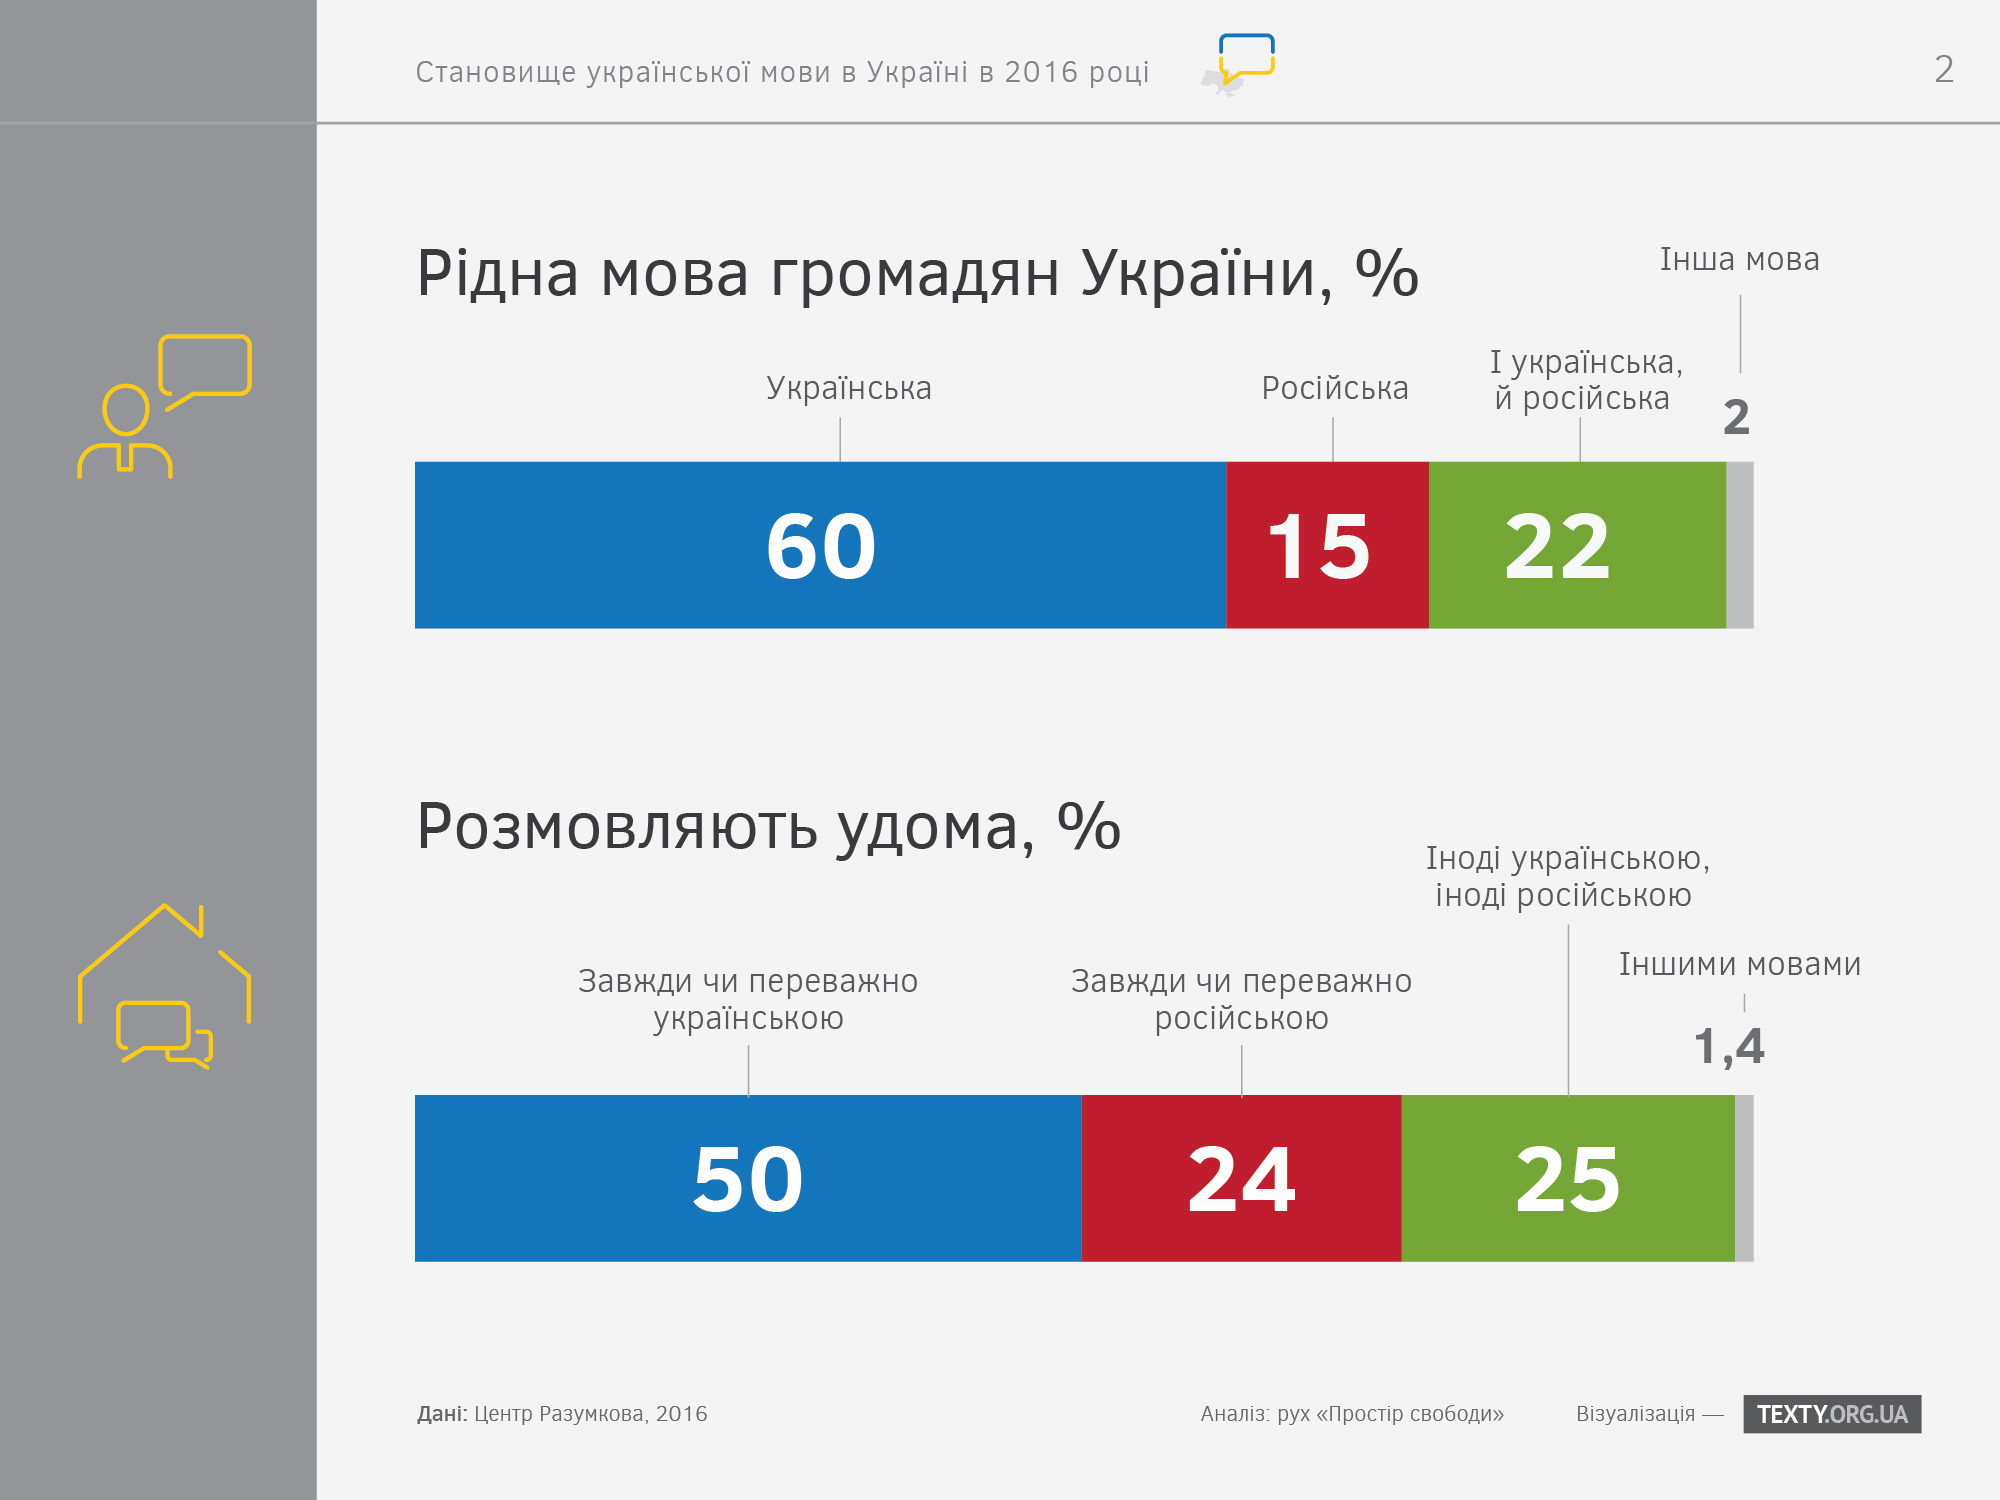 ridna-mova-gromadyan-ukrayini-infografika